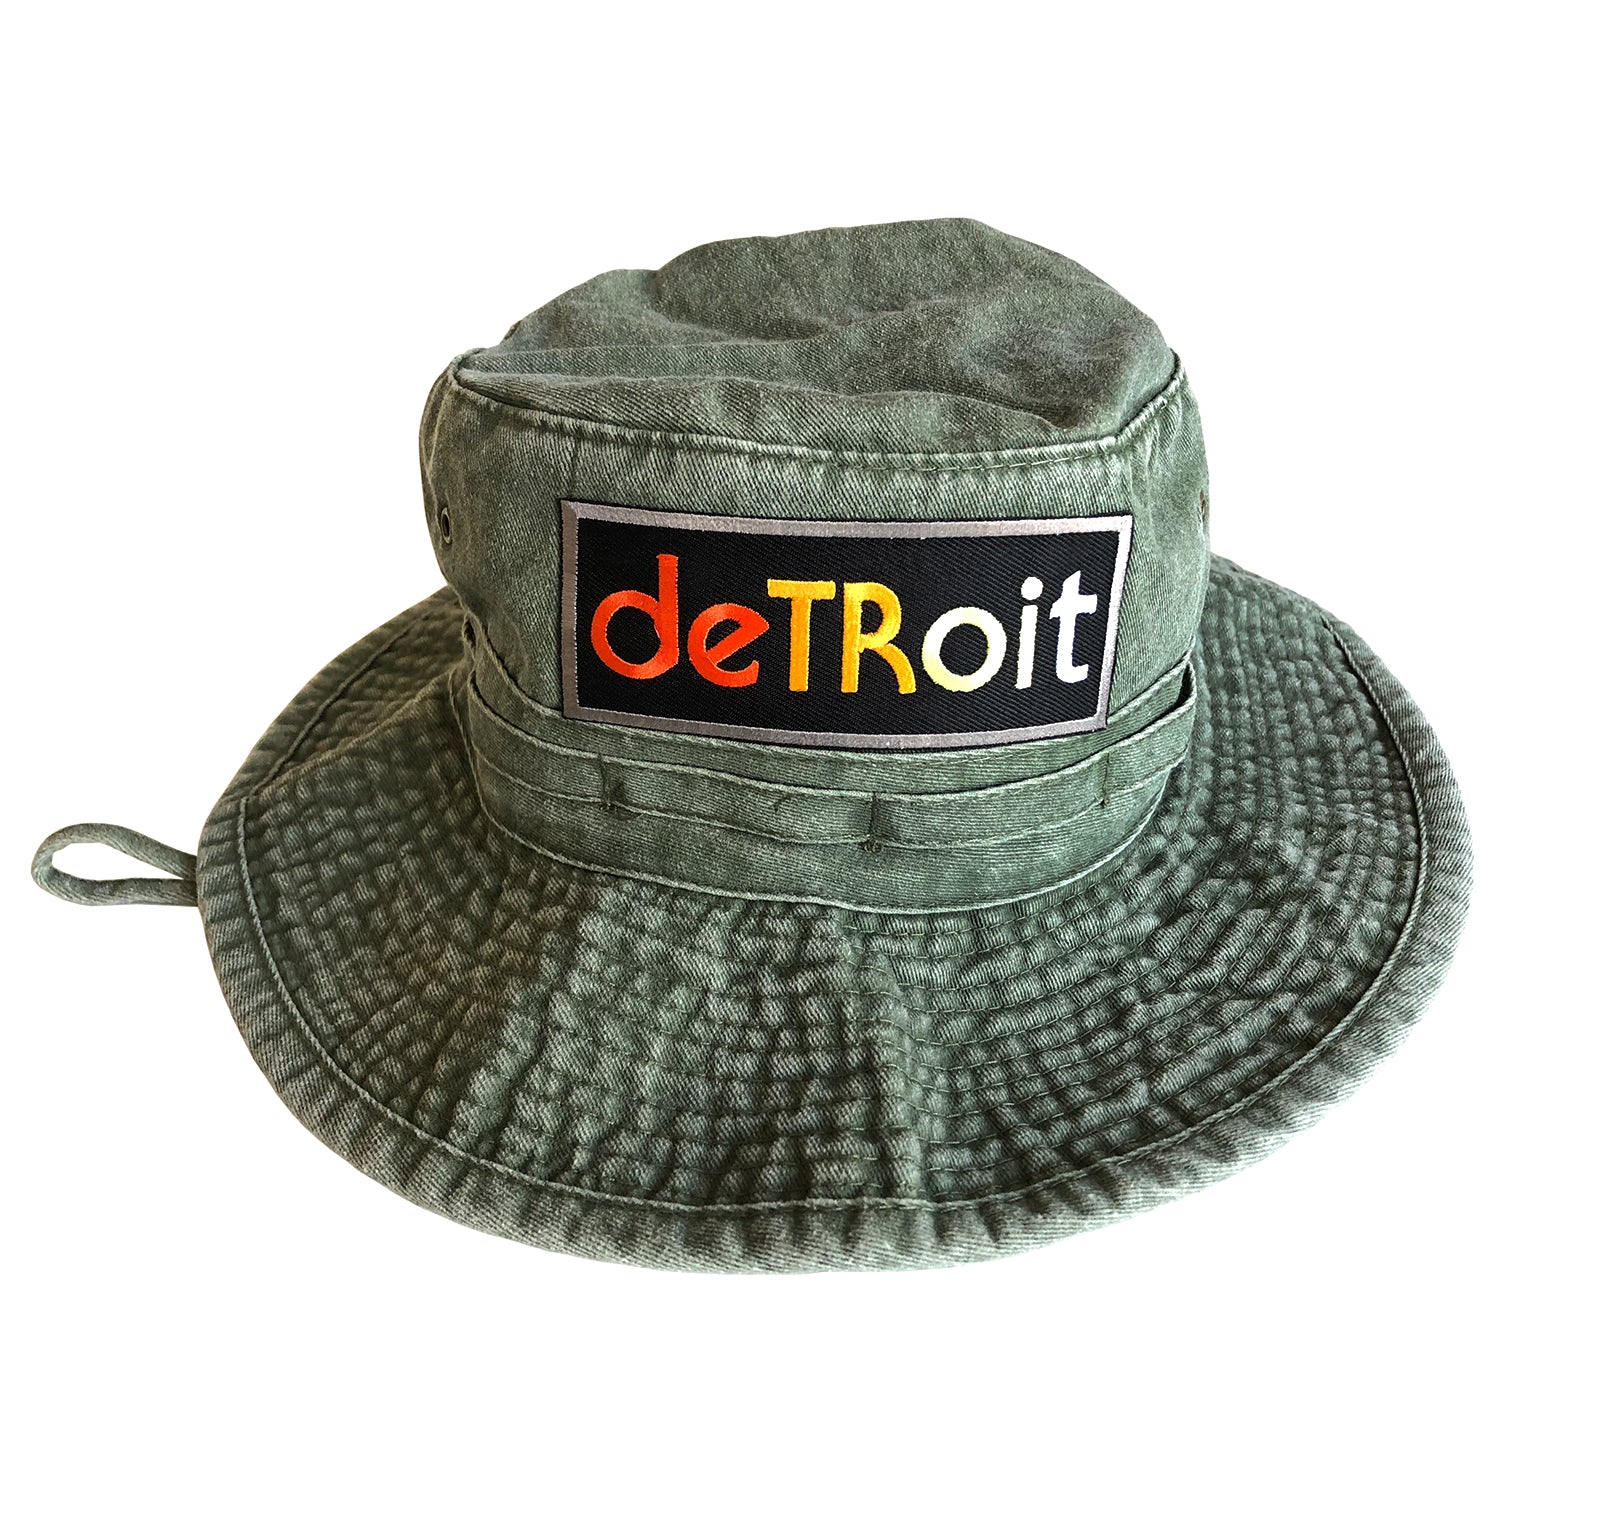 Detroit Rhythm Composer Bucket Hat, Well Done Goods Grey